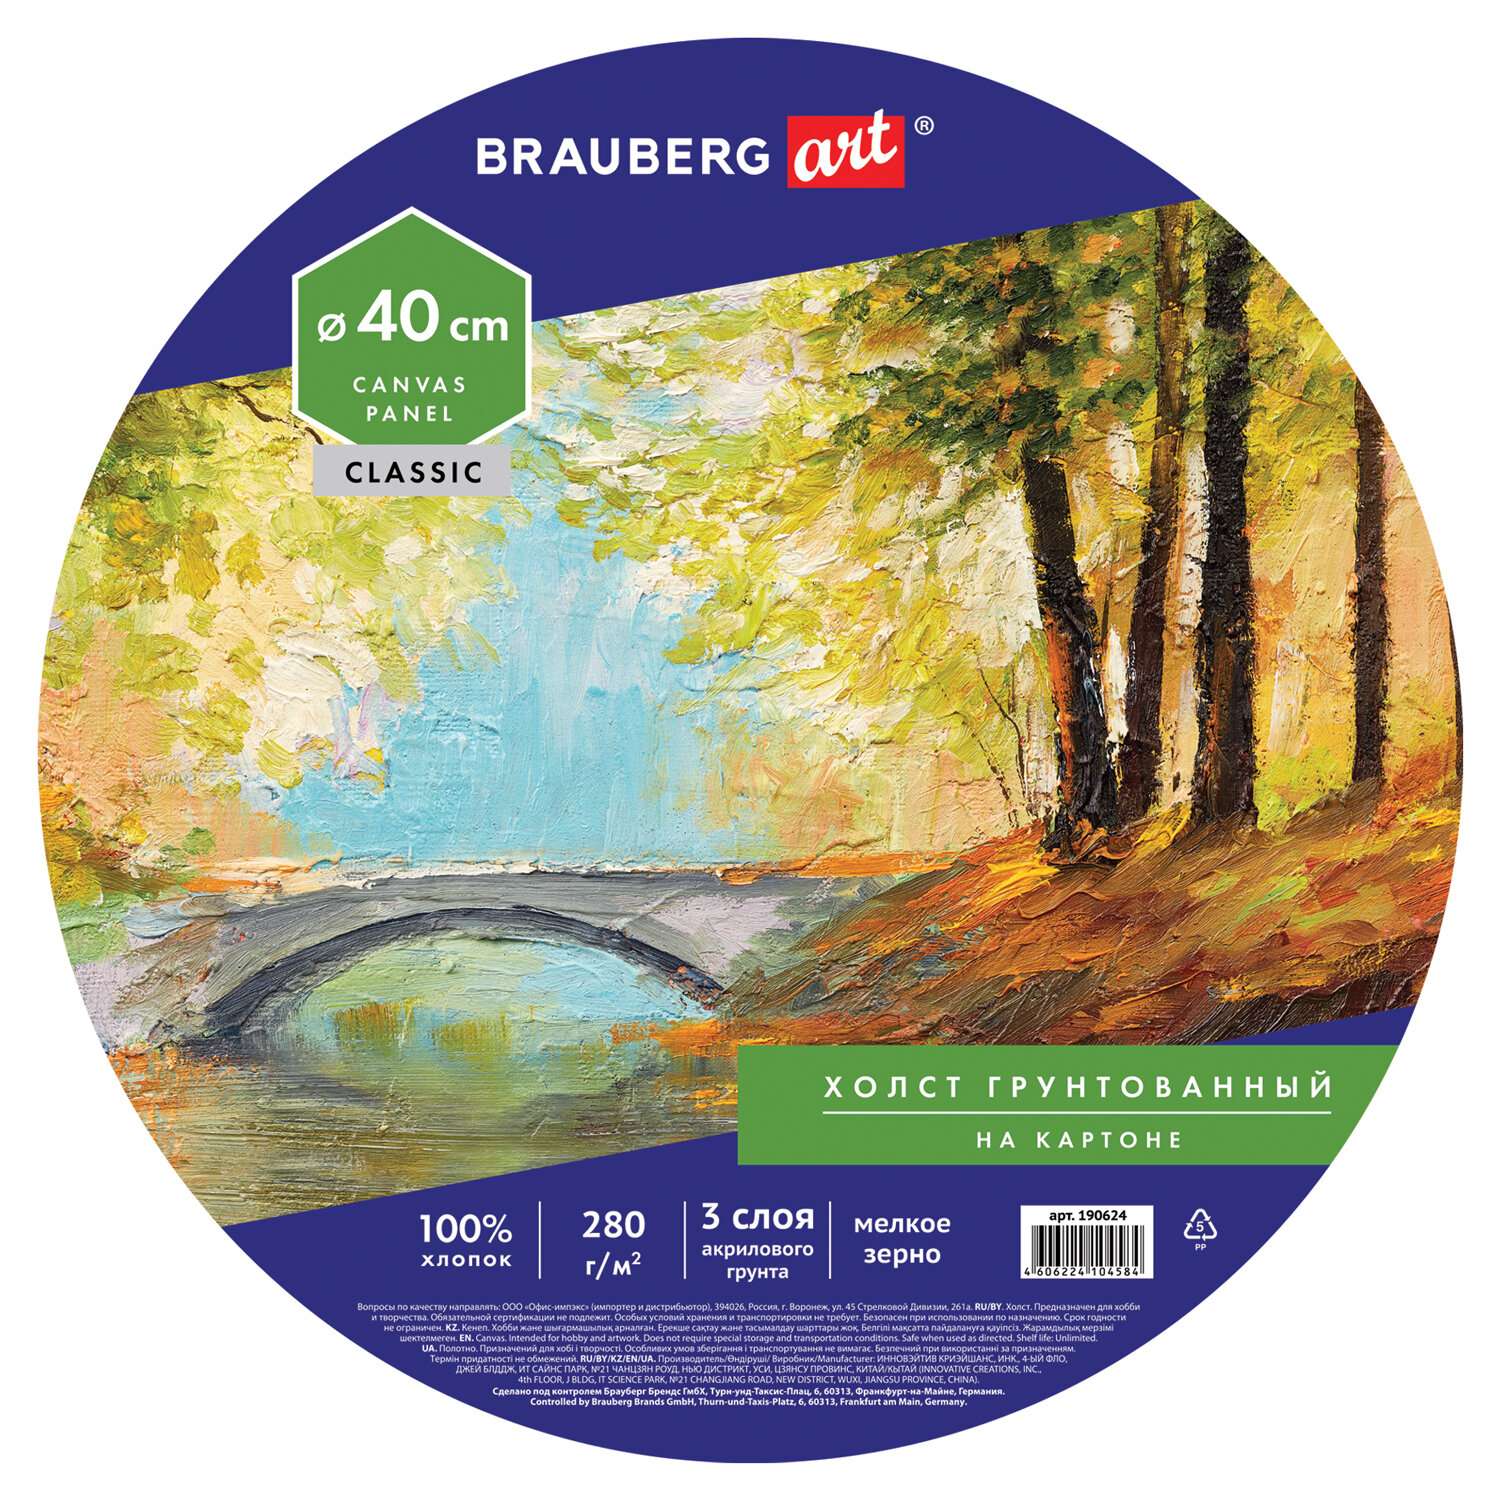 Холст на картоне Brauberg для рисования 40 см - фото 2